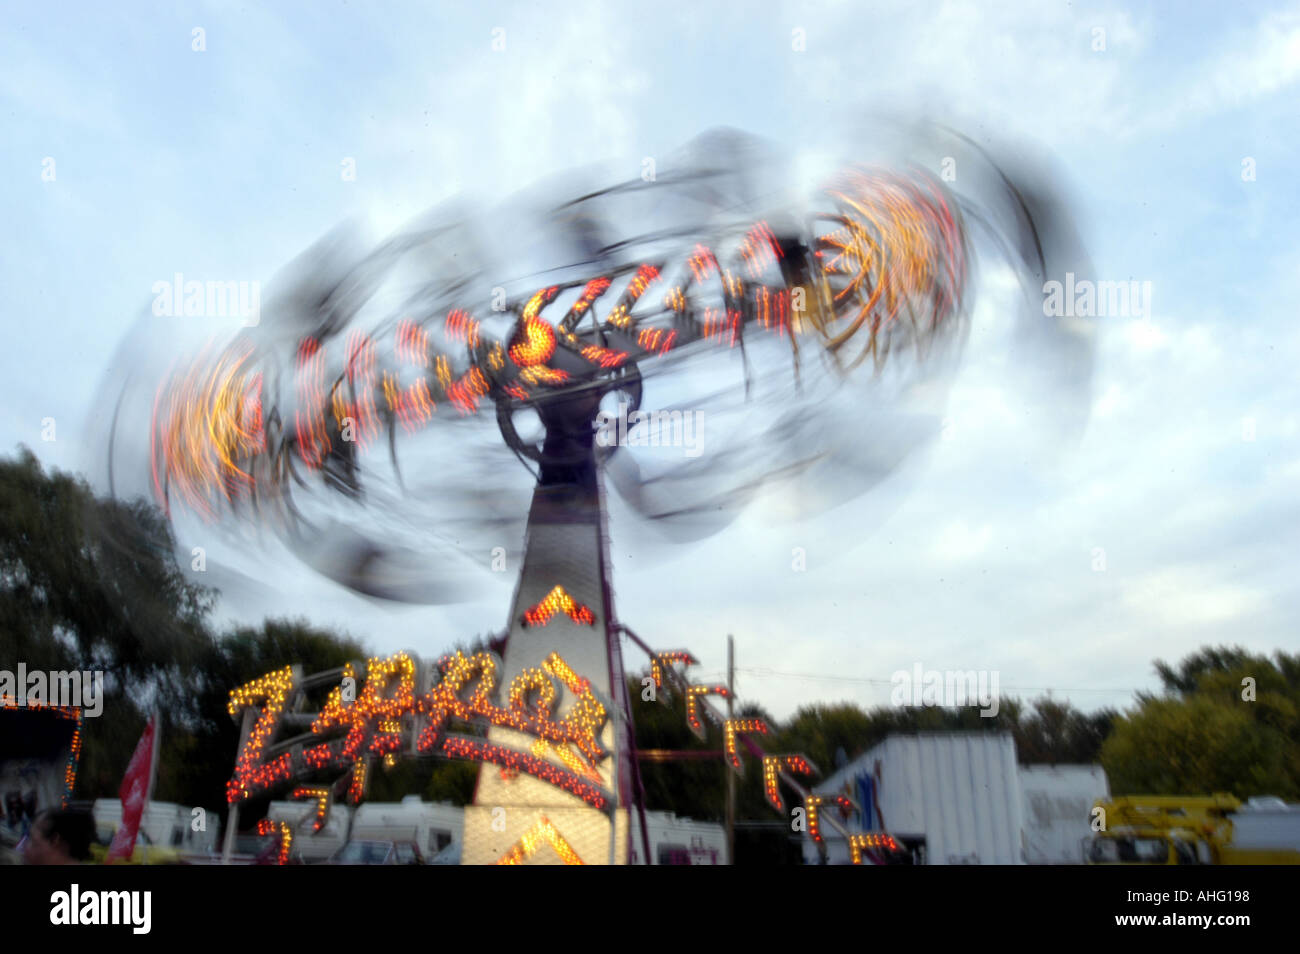 Zipper carnival ride in motion Stock Photo